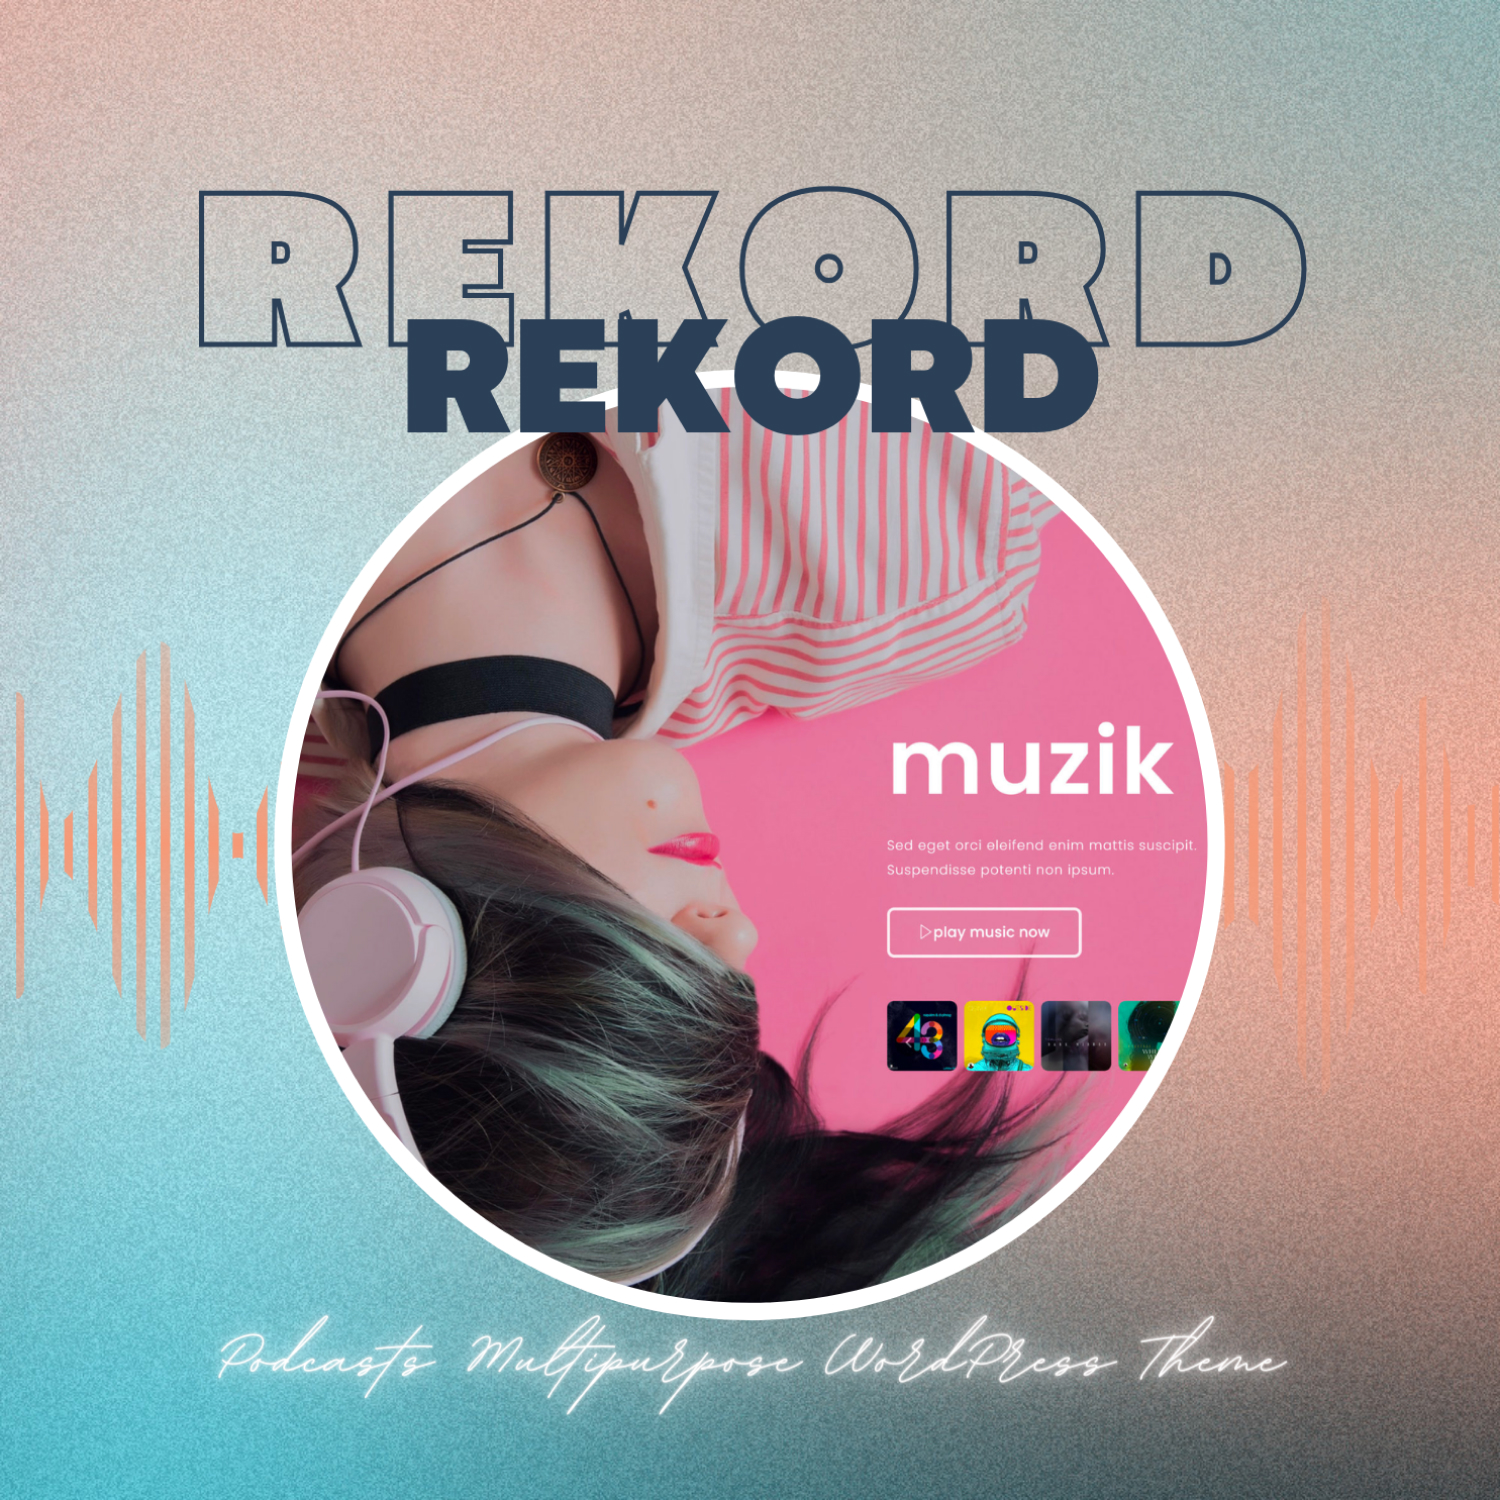 Rekord - Ajaxify Music - Events - Podcasts Multipurpose WordPress Theme.